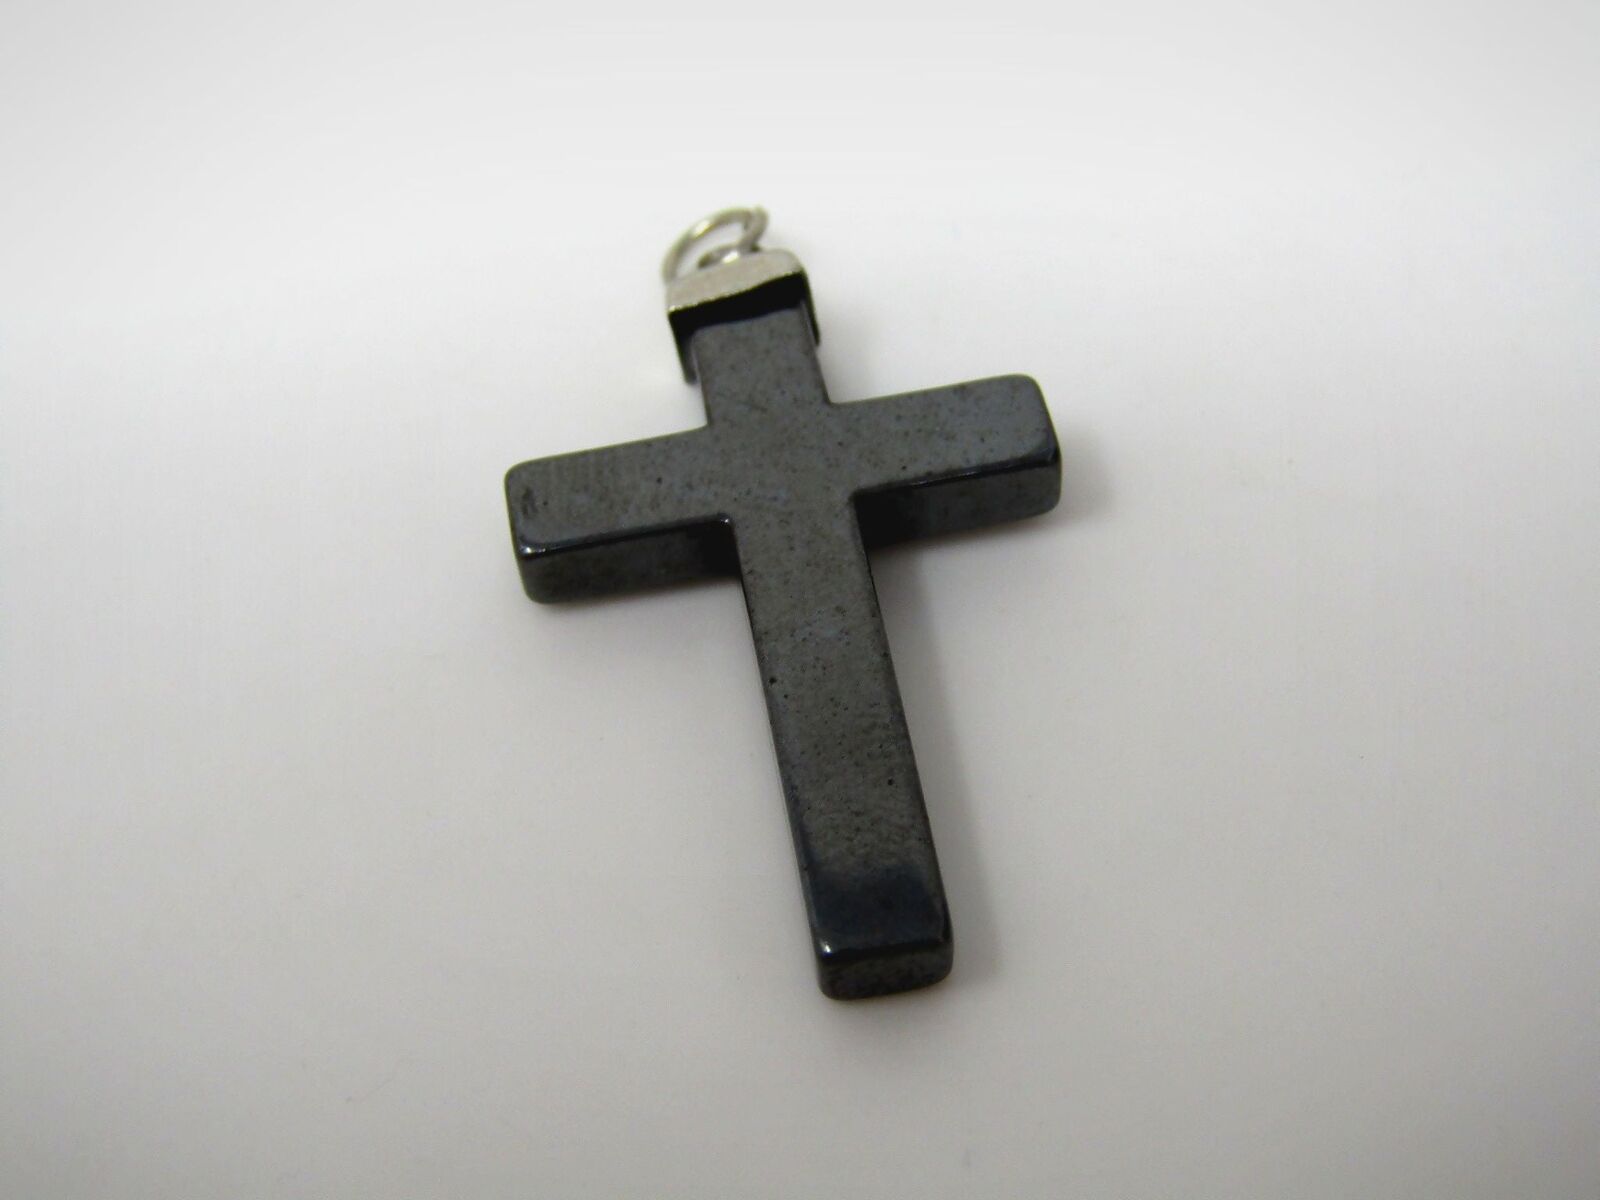 Vintage Christian Cross Pendant: Hematite Polished Nice Classic Design